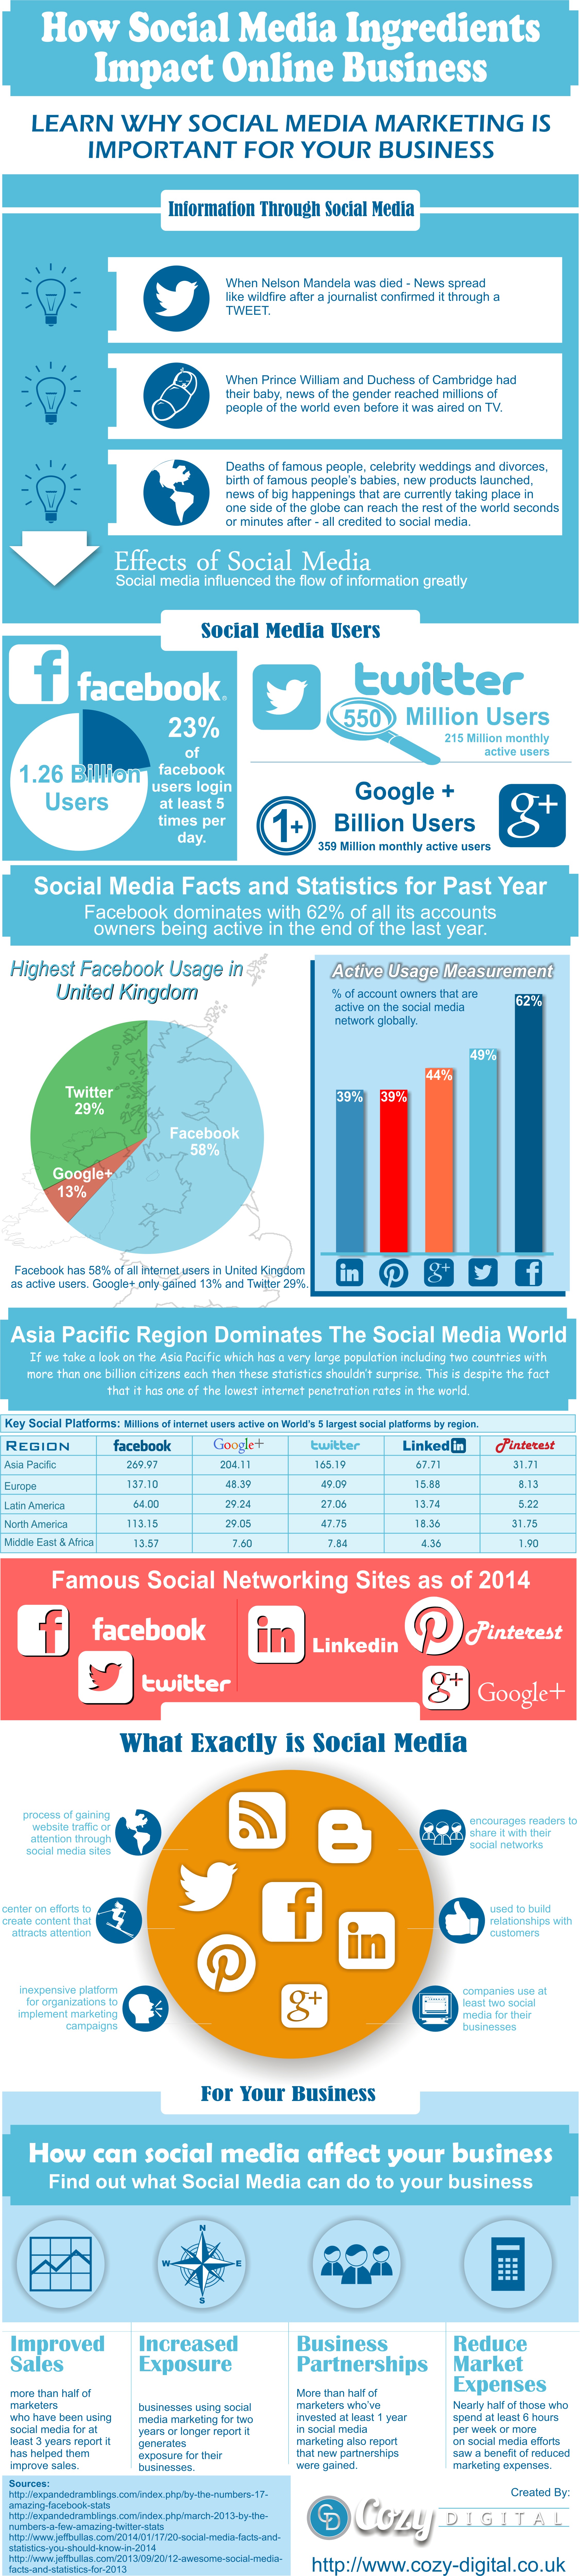 How Social Media Ingredients Impact Online Business